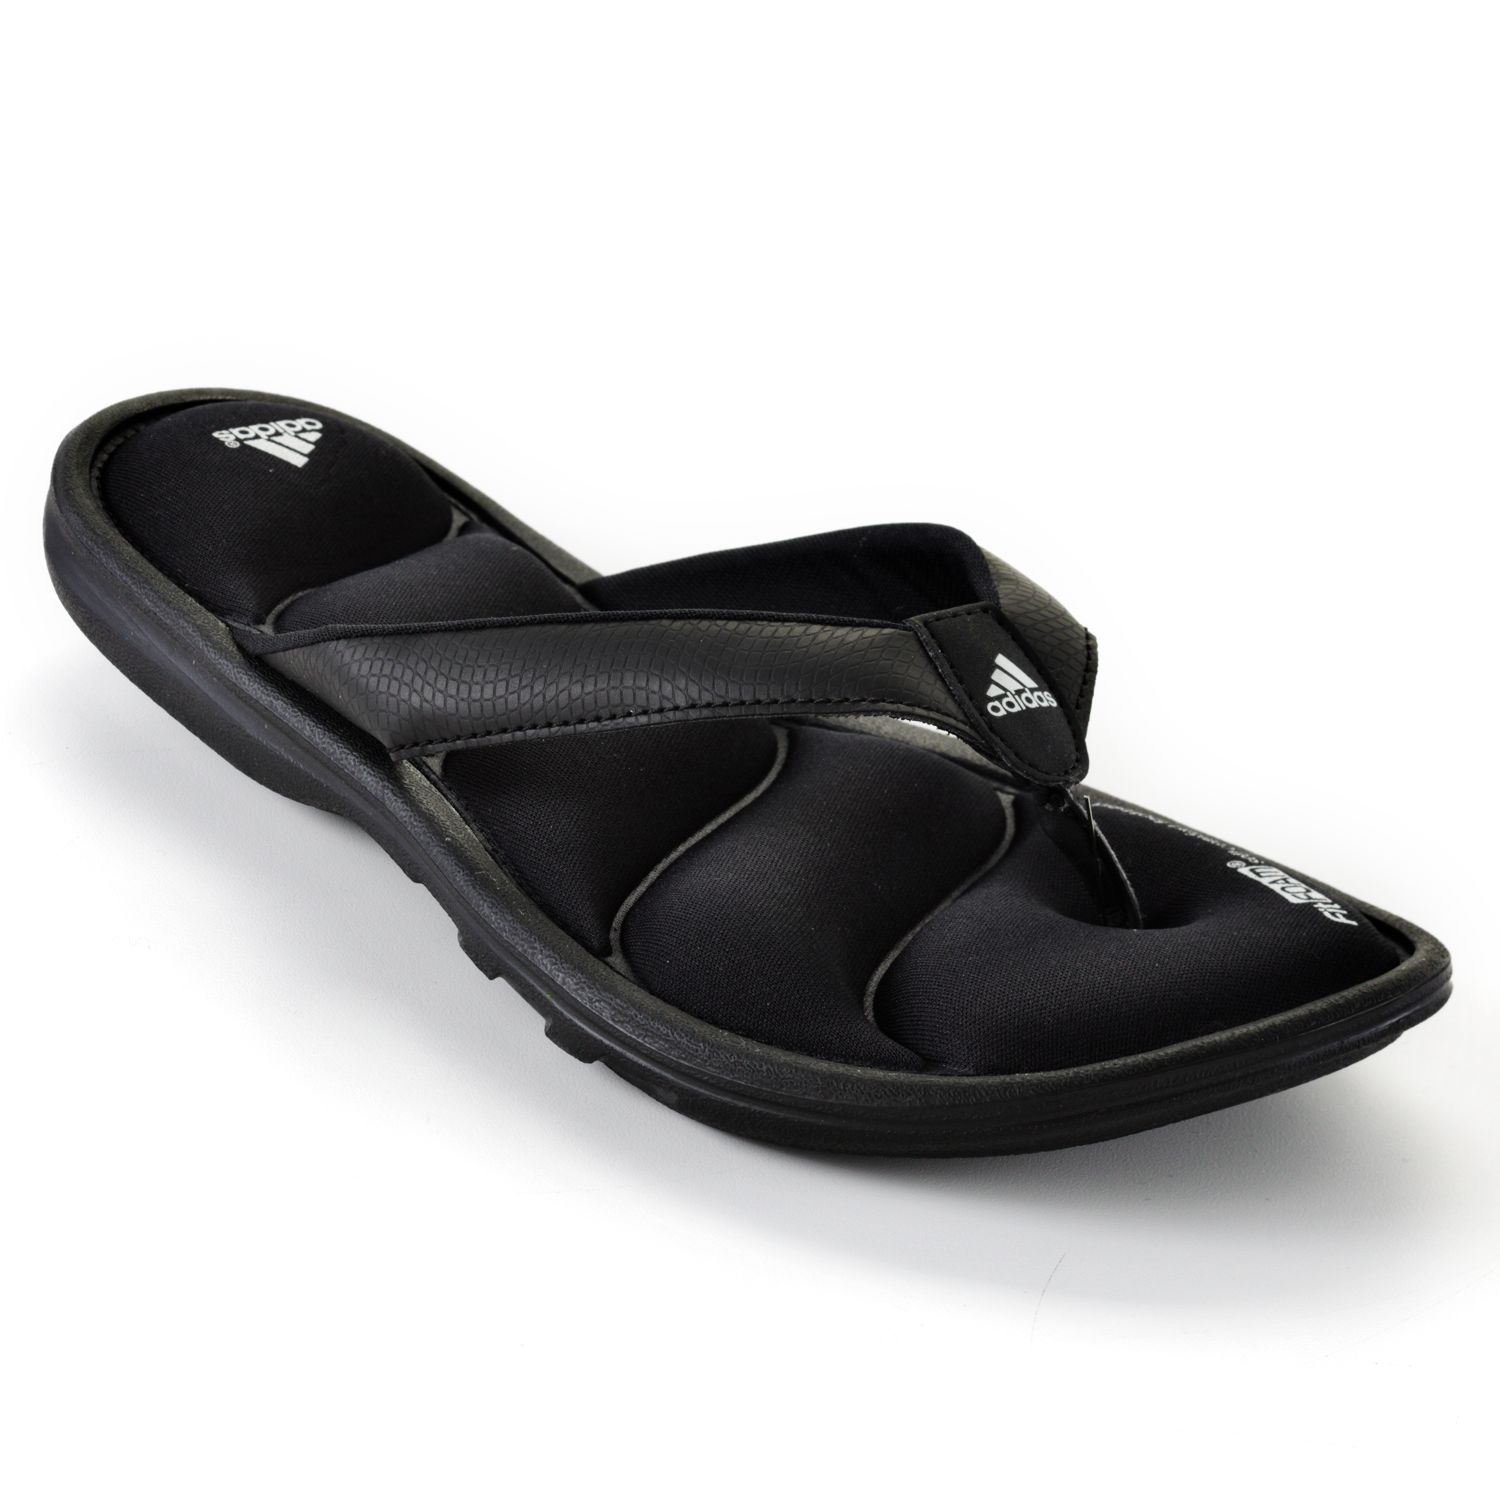 adidas black thong flip flop